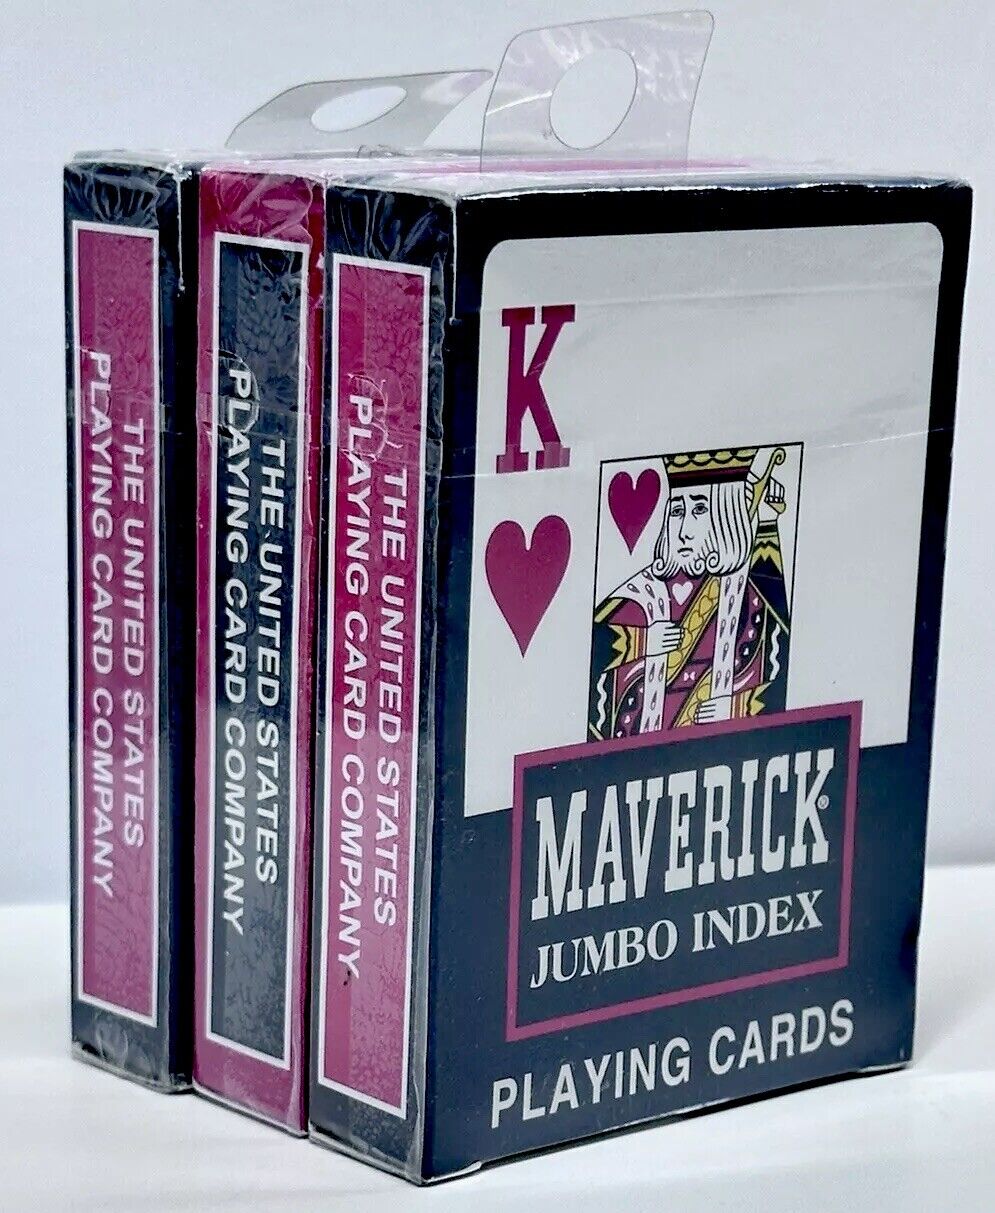 3 Maverick Vintage Playing Cards Decks Jumbo Index Model 1206 New Sealed Bundle